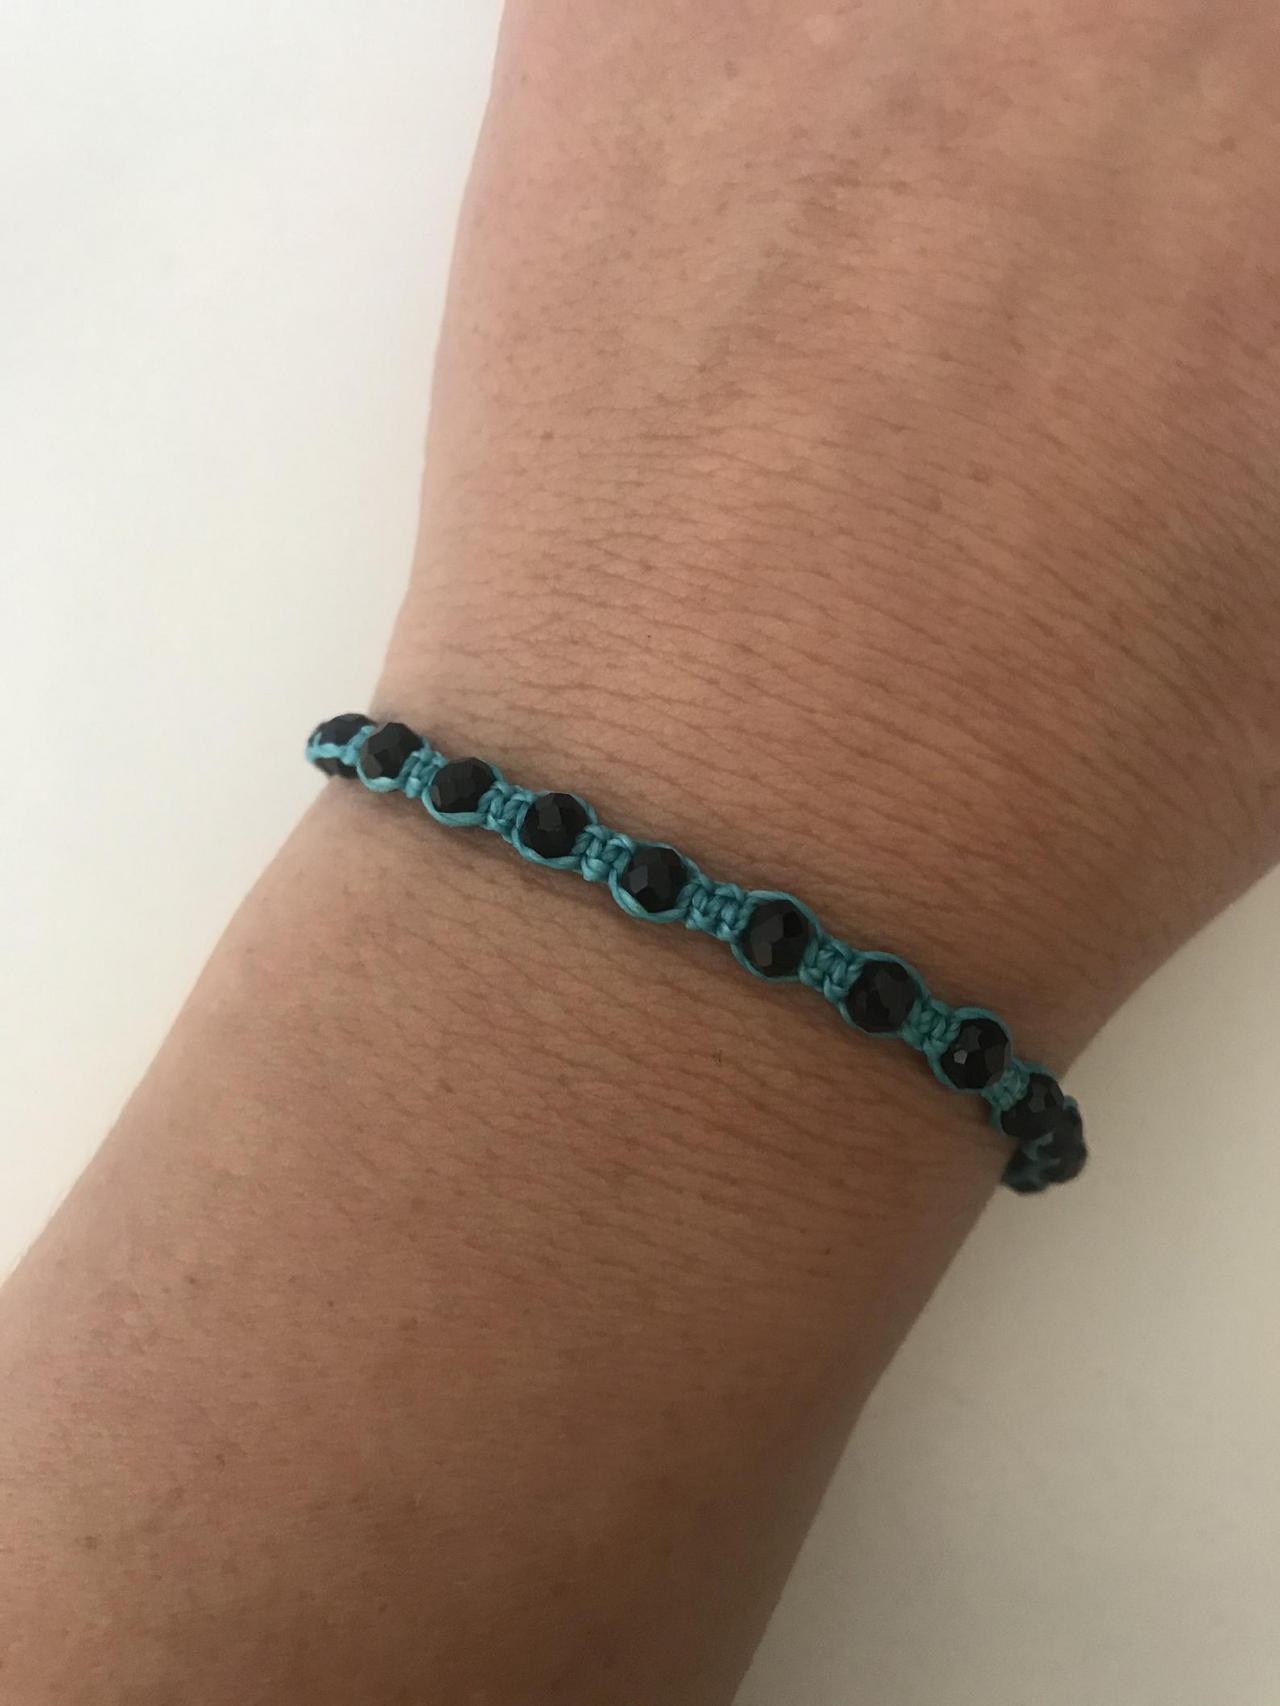 Macrame Bracelet 364- Friendship Kabbalah Blue Bracelet Adjustable Black Crystal Beads Perfect Gift